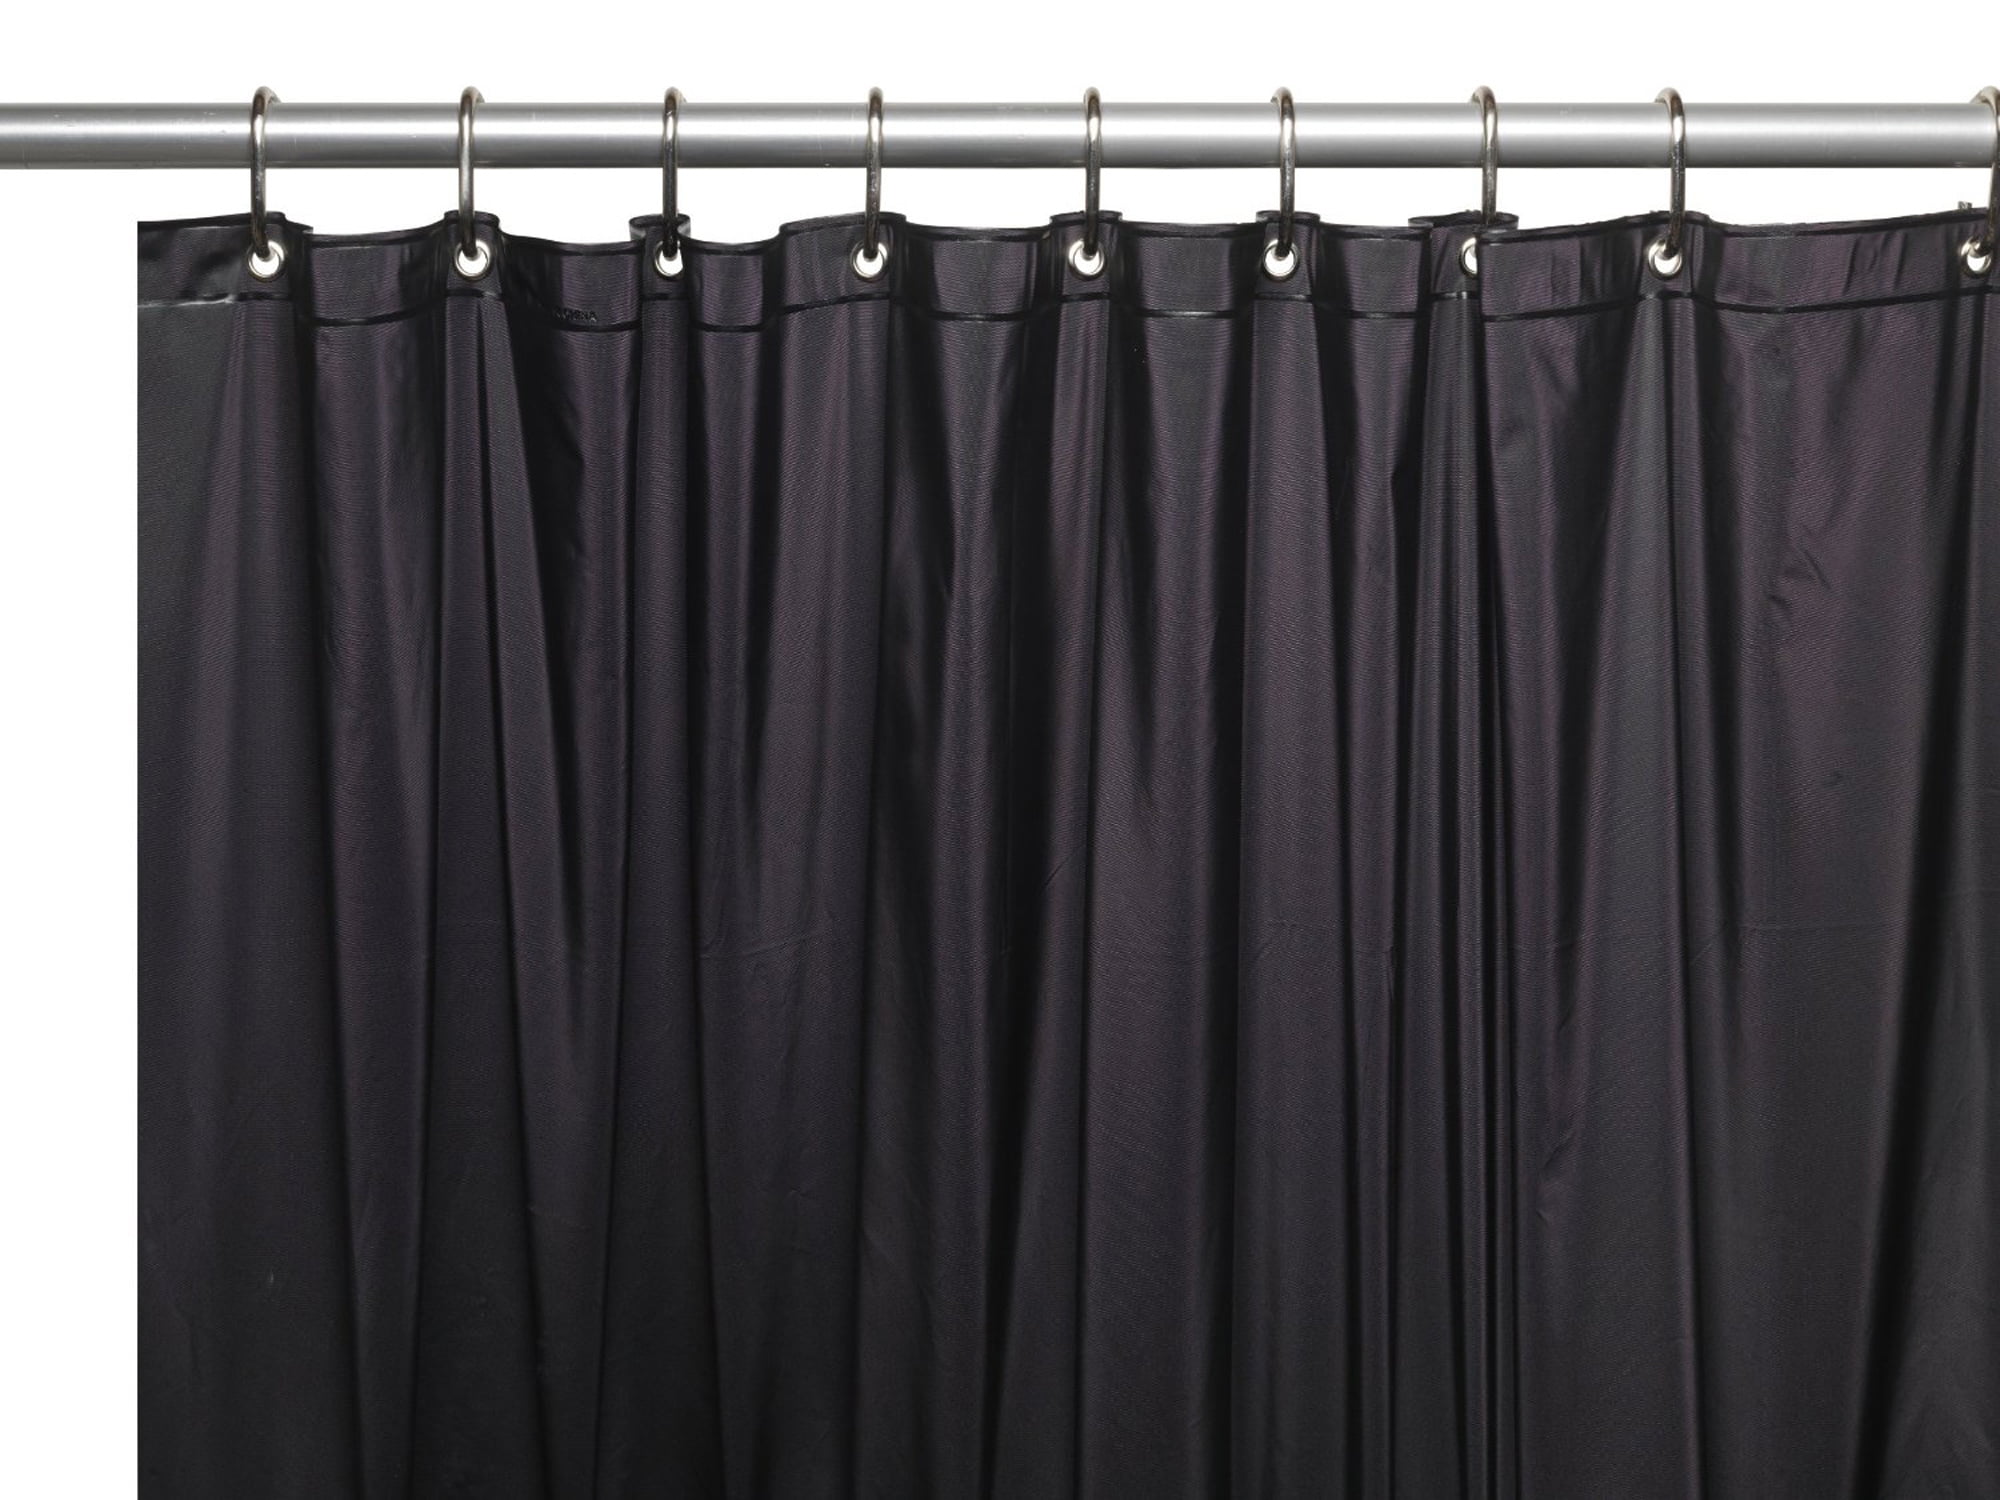 Shower Curtain Liner Metal Grommets Standard Size 70" x 72" Magnets 